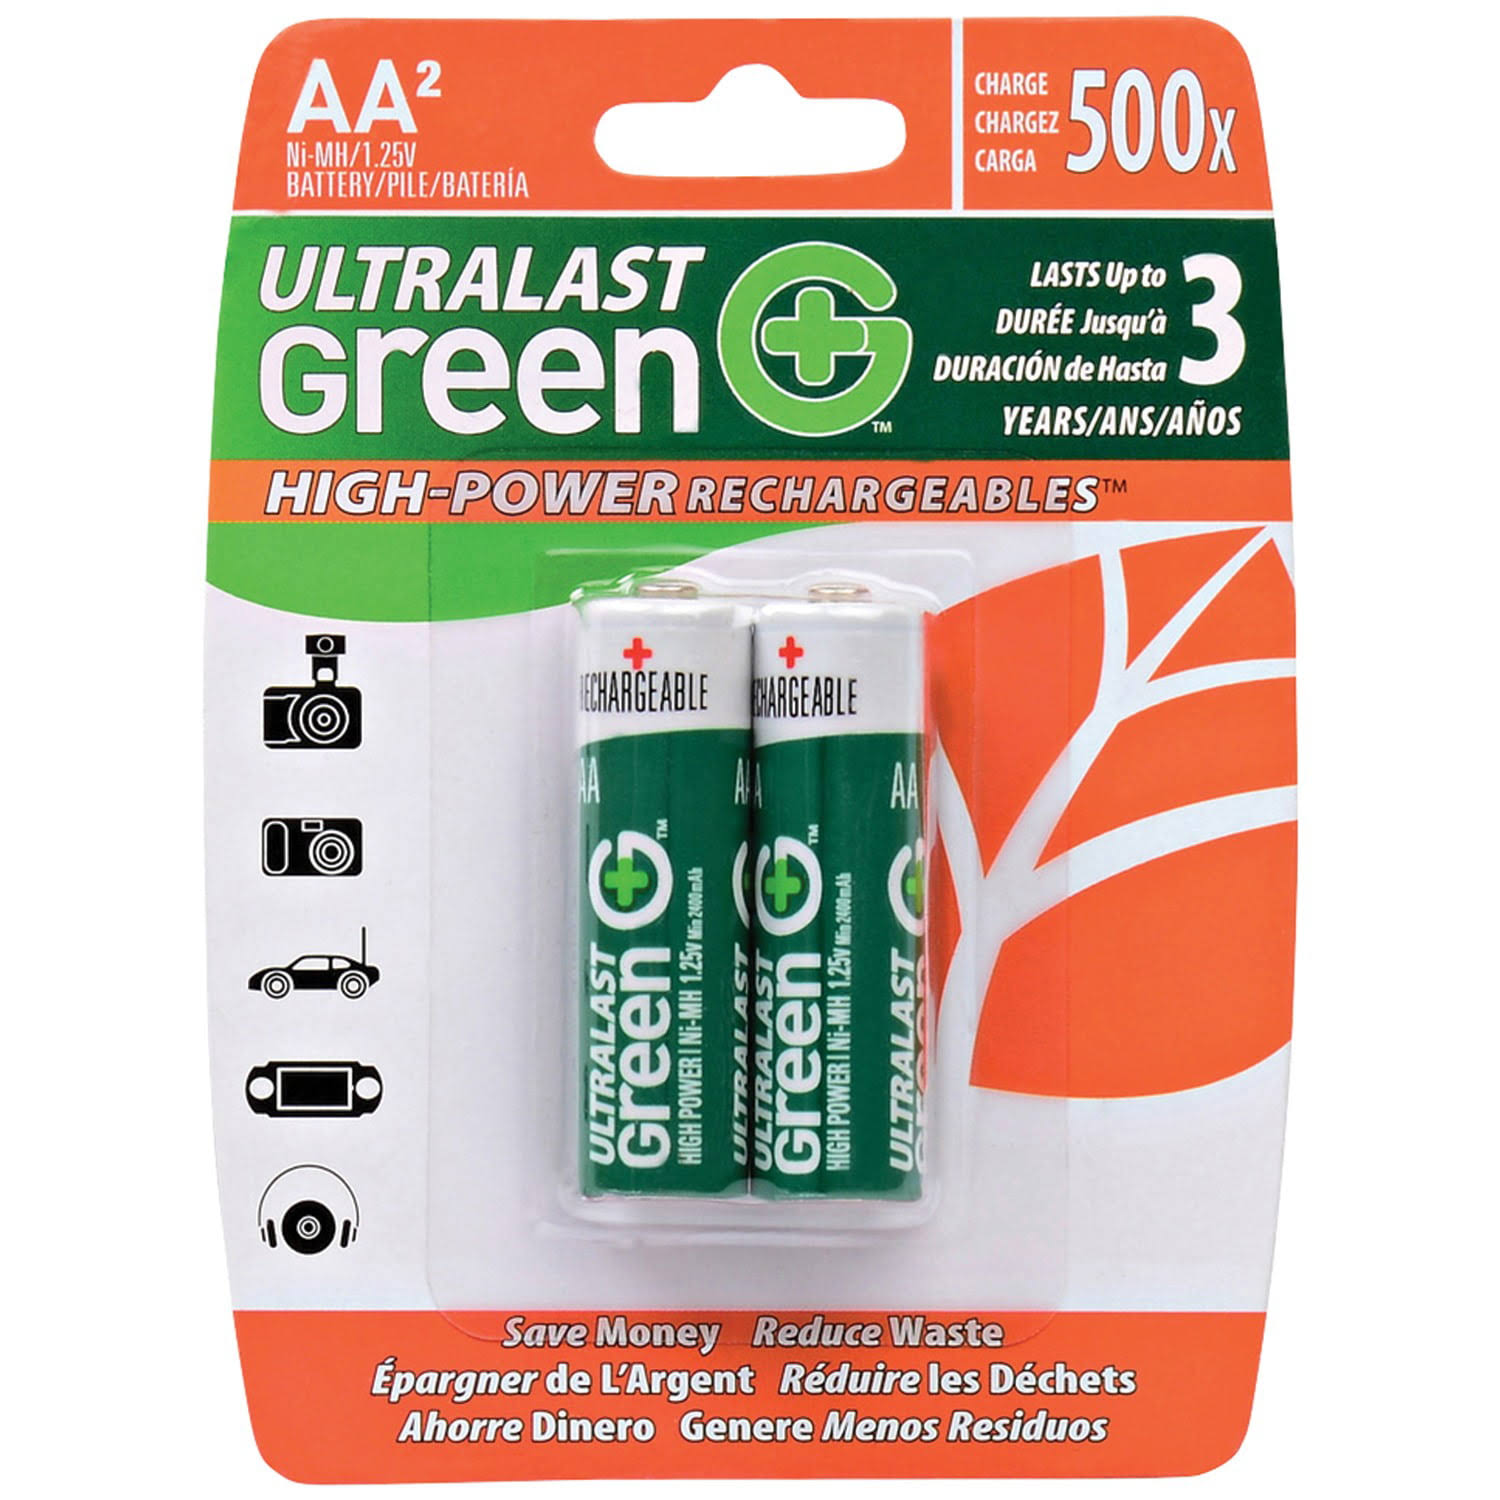 Ultralast Rechargeable Battery - AA